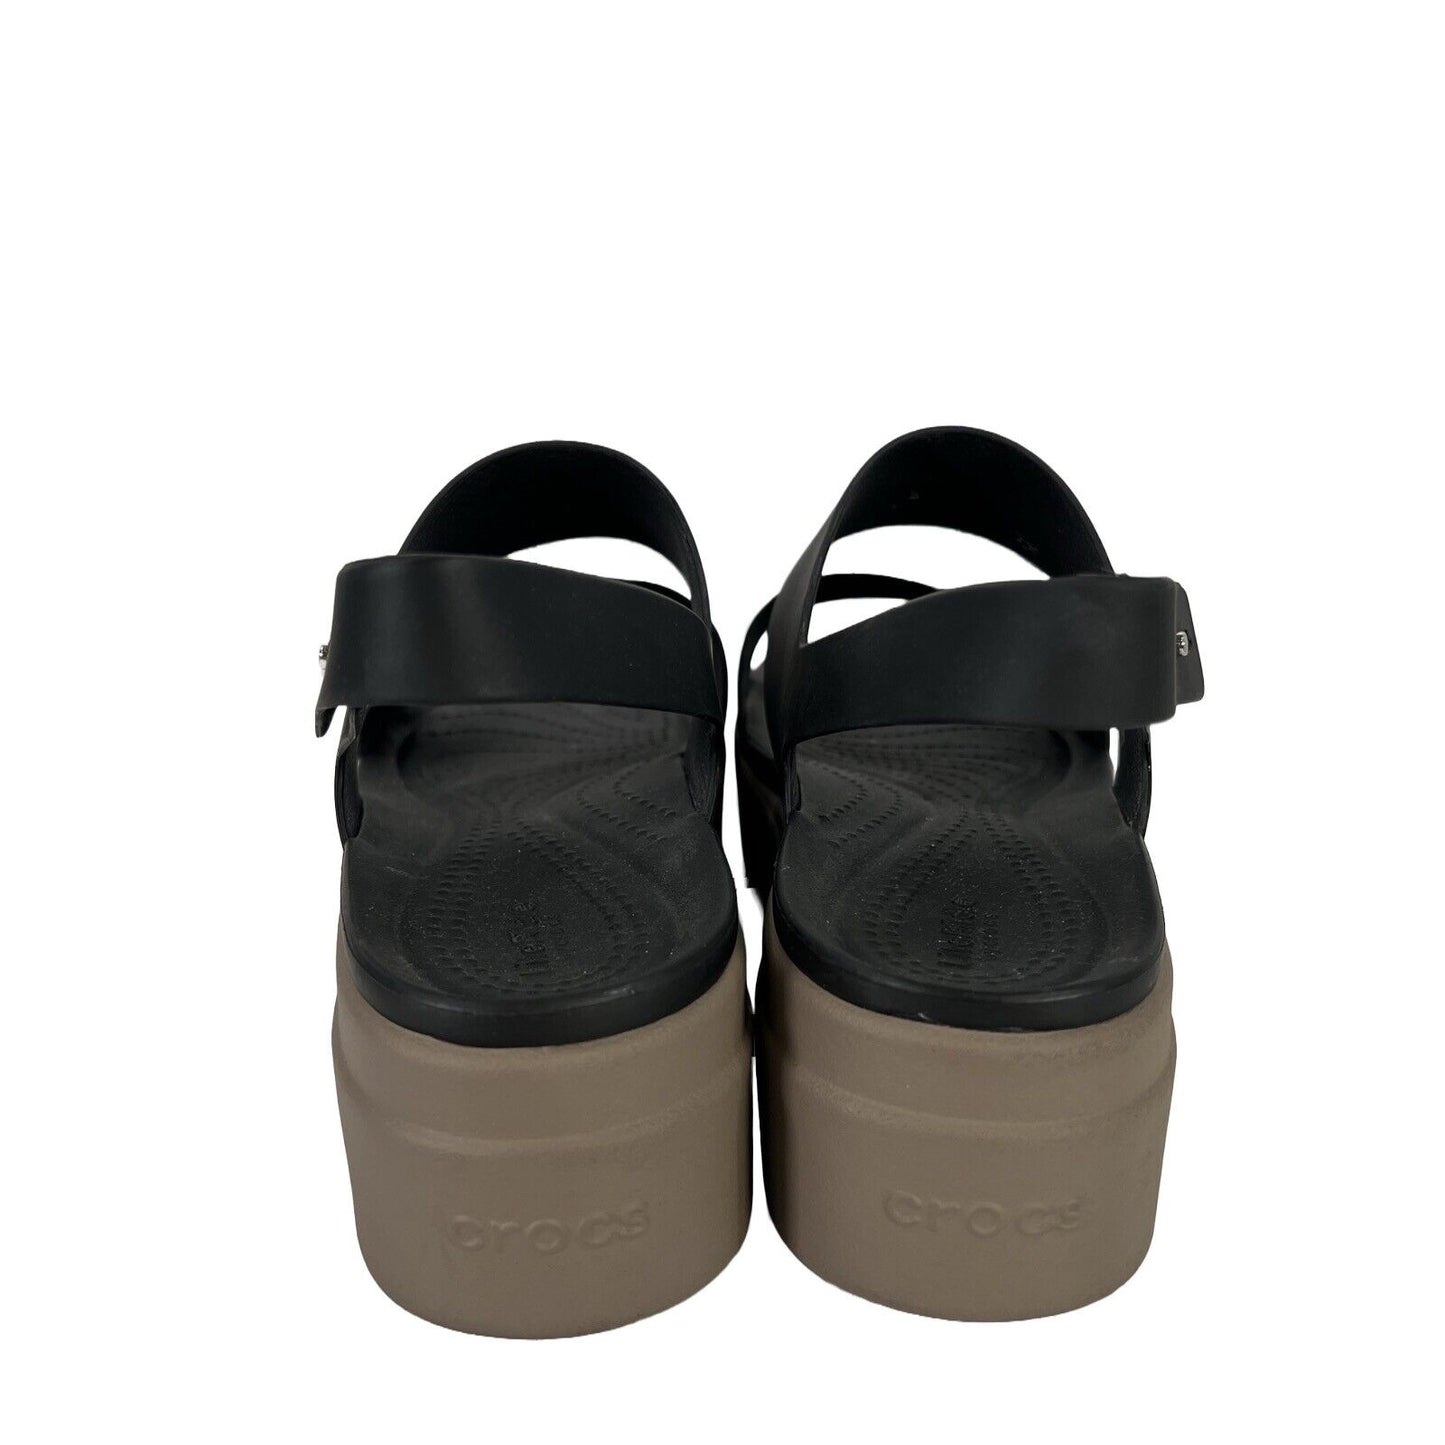 Crocs Women's Black Brooklyn Low Wedge Platform Sandals - 9